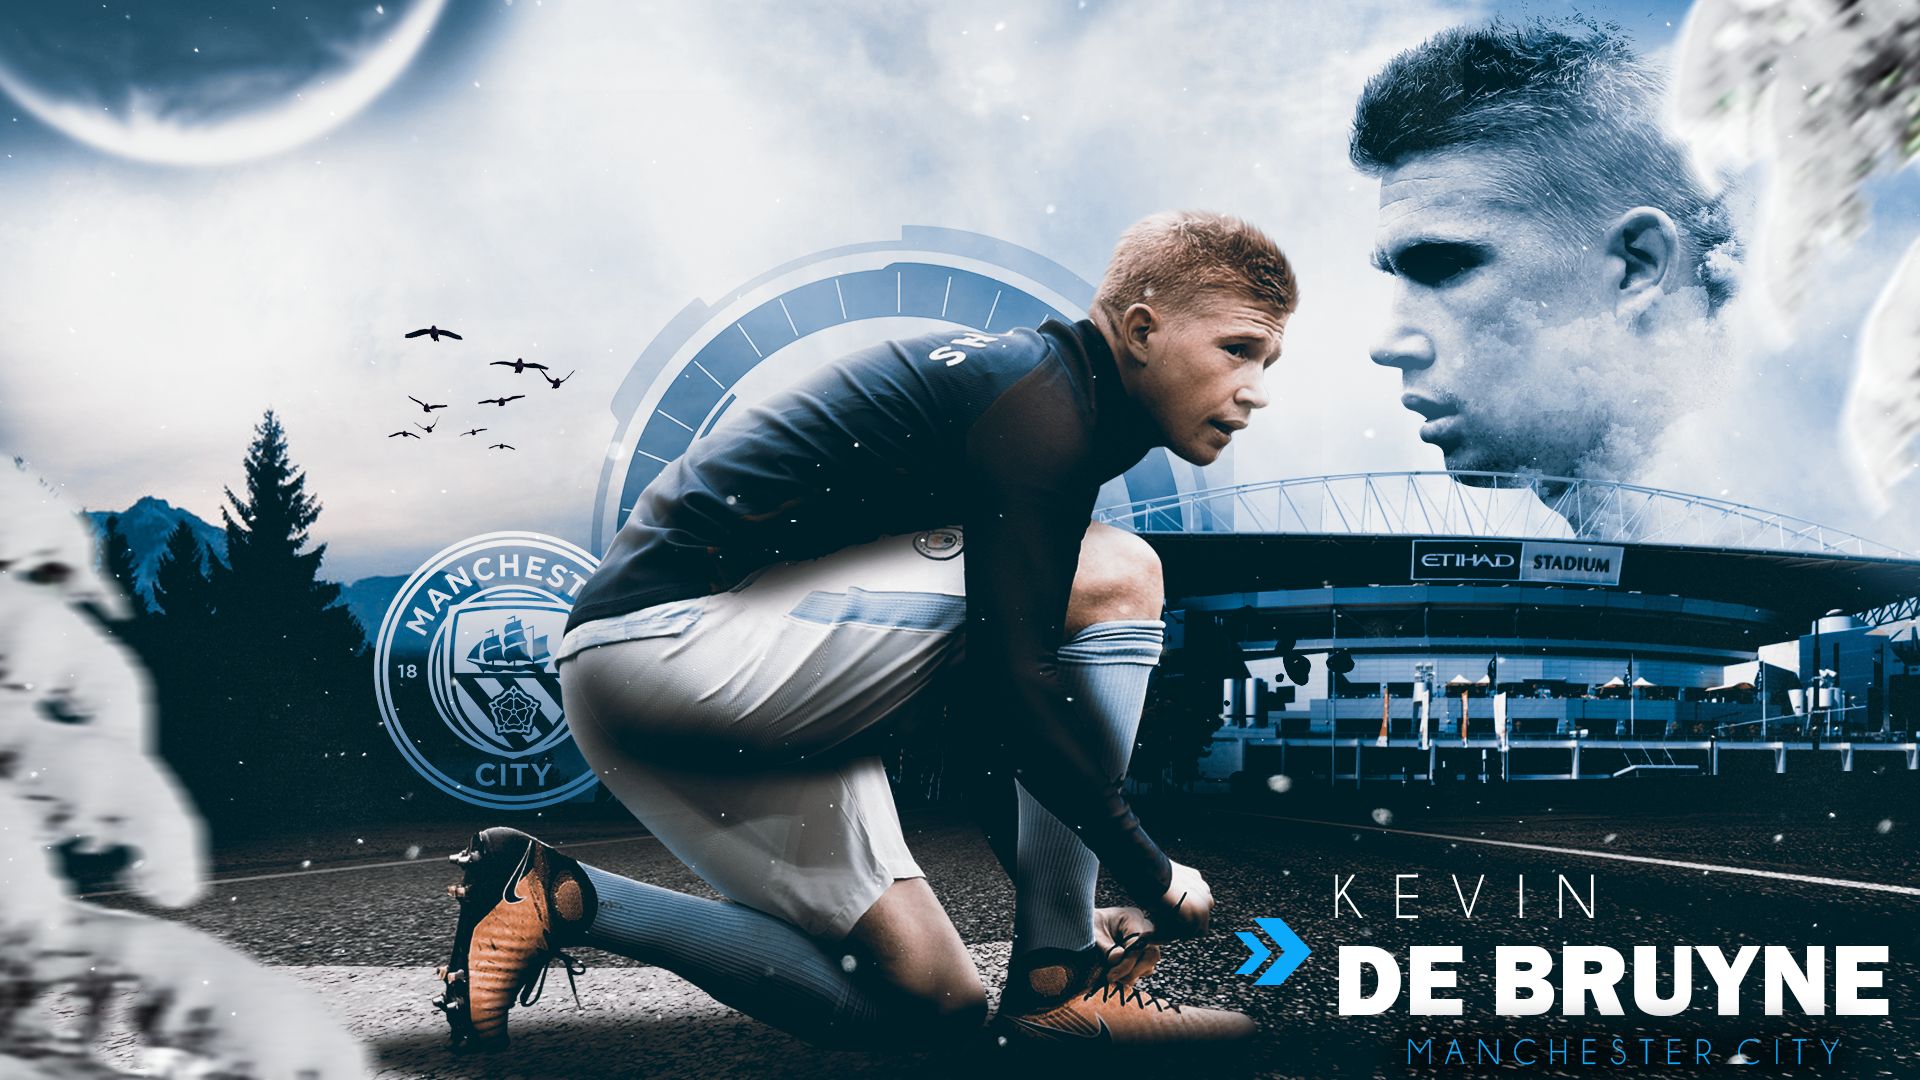 Kevin De Bruyne celebrates goal in crowd 2K wallpaper download